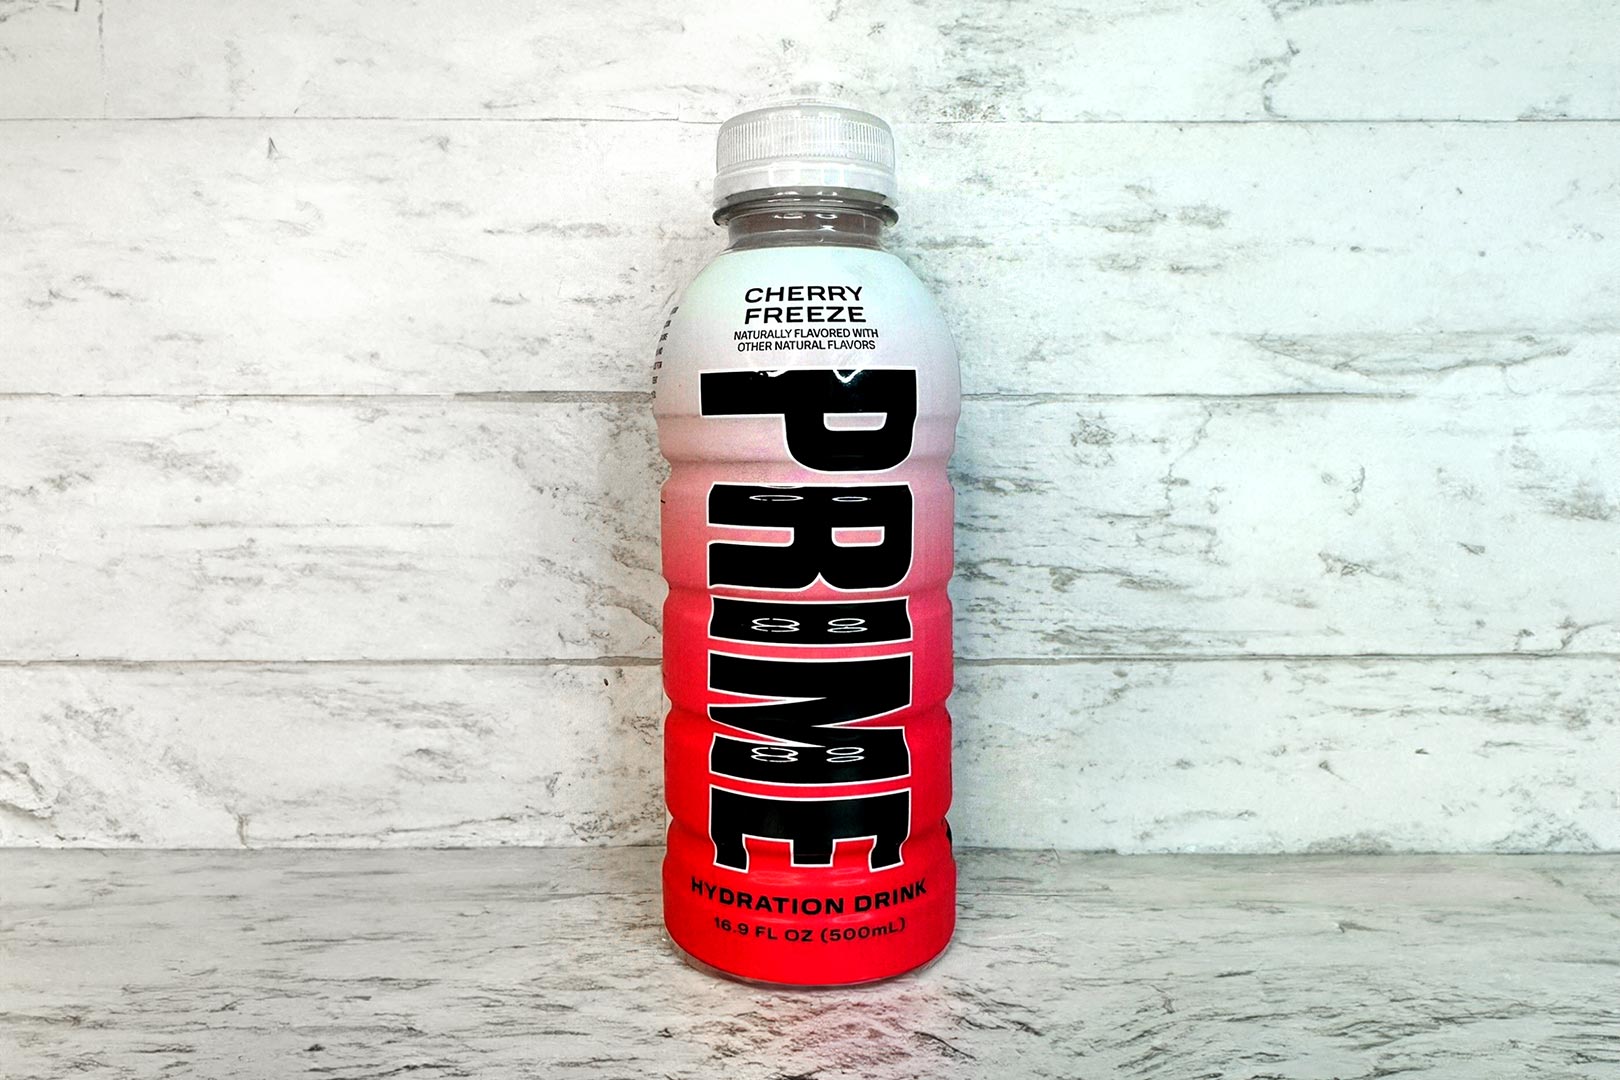 Cherry Freeze Prime Hydration Drink Shows Up On Ebay